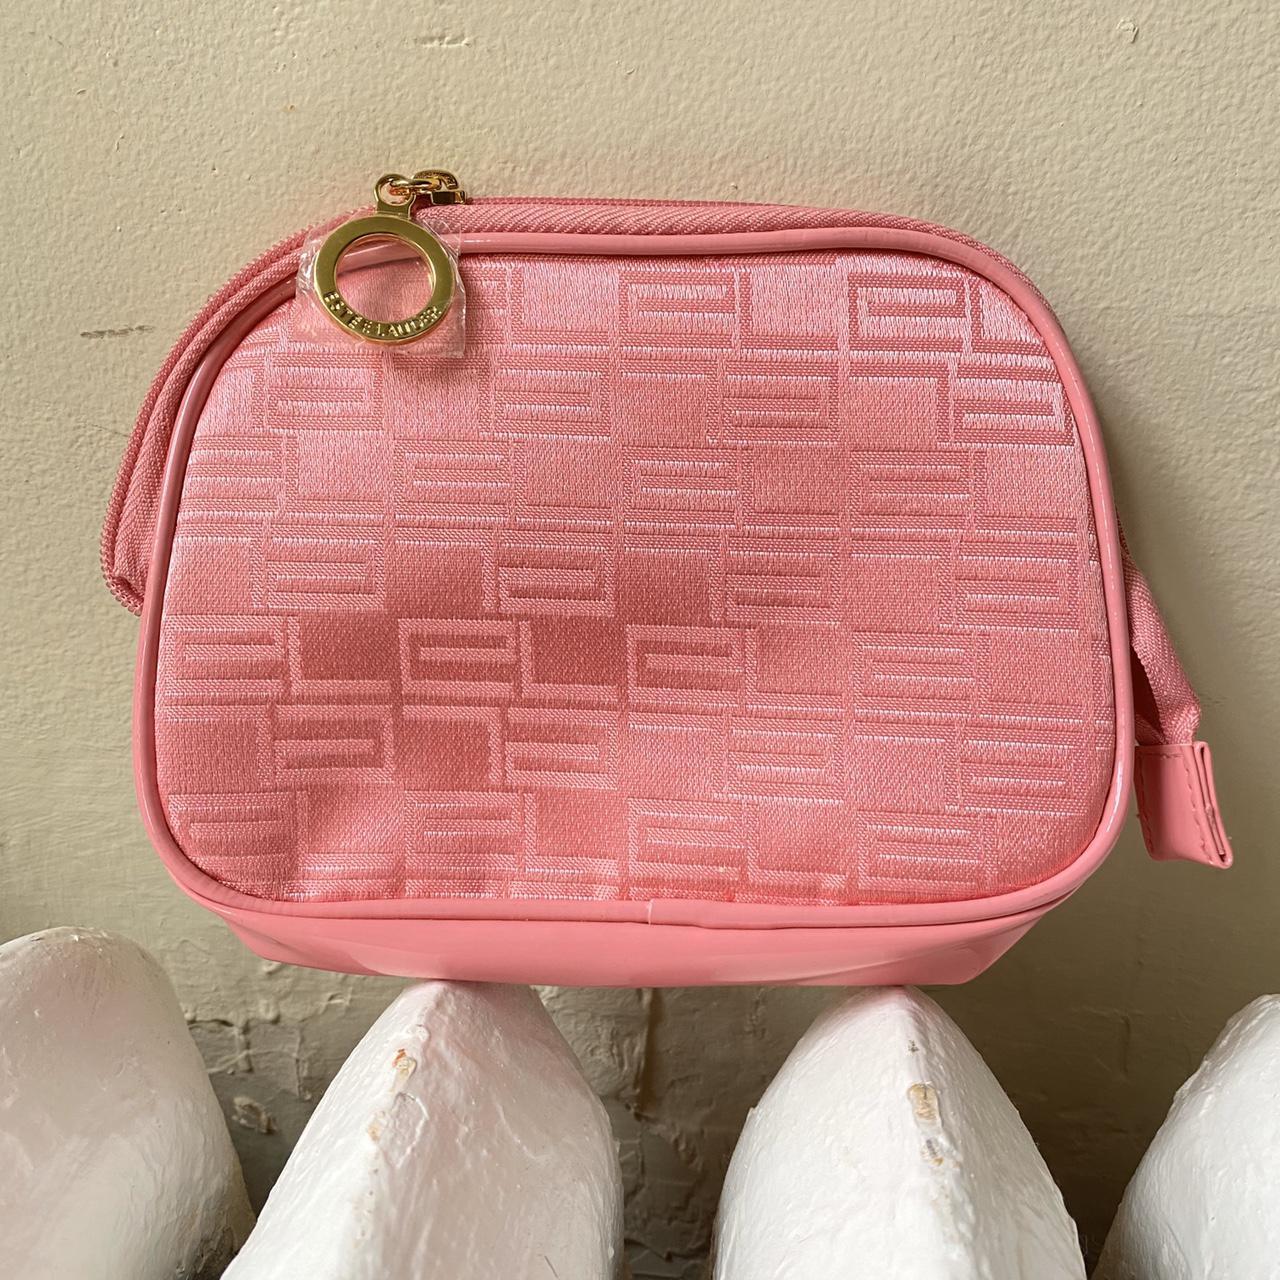 Estée Lauder Women's Pink and Gold Bag